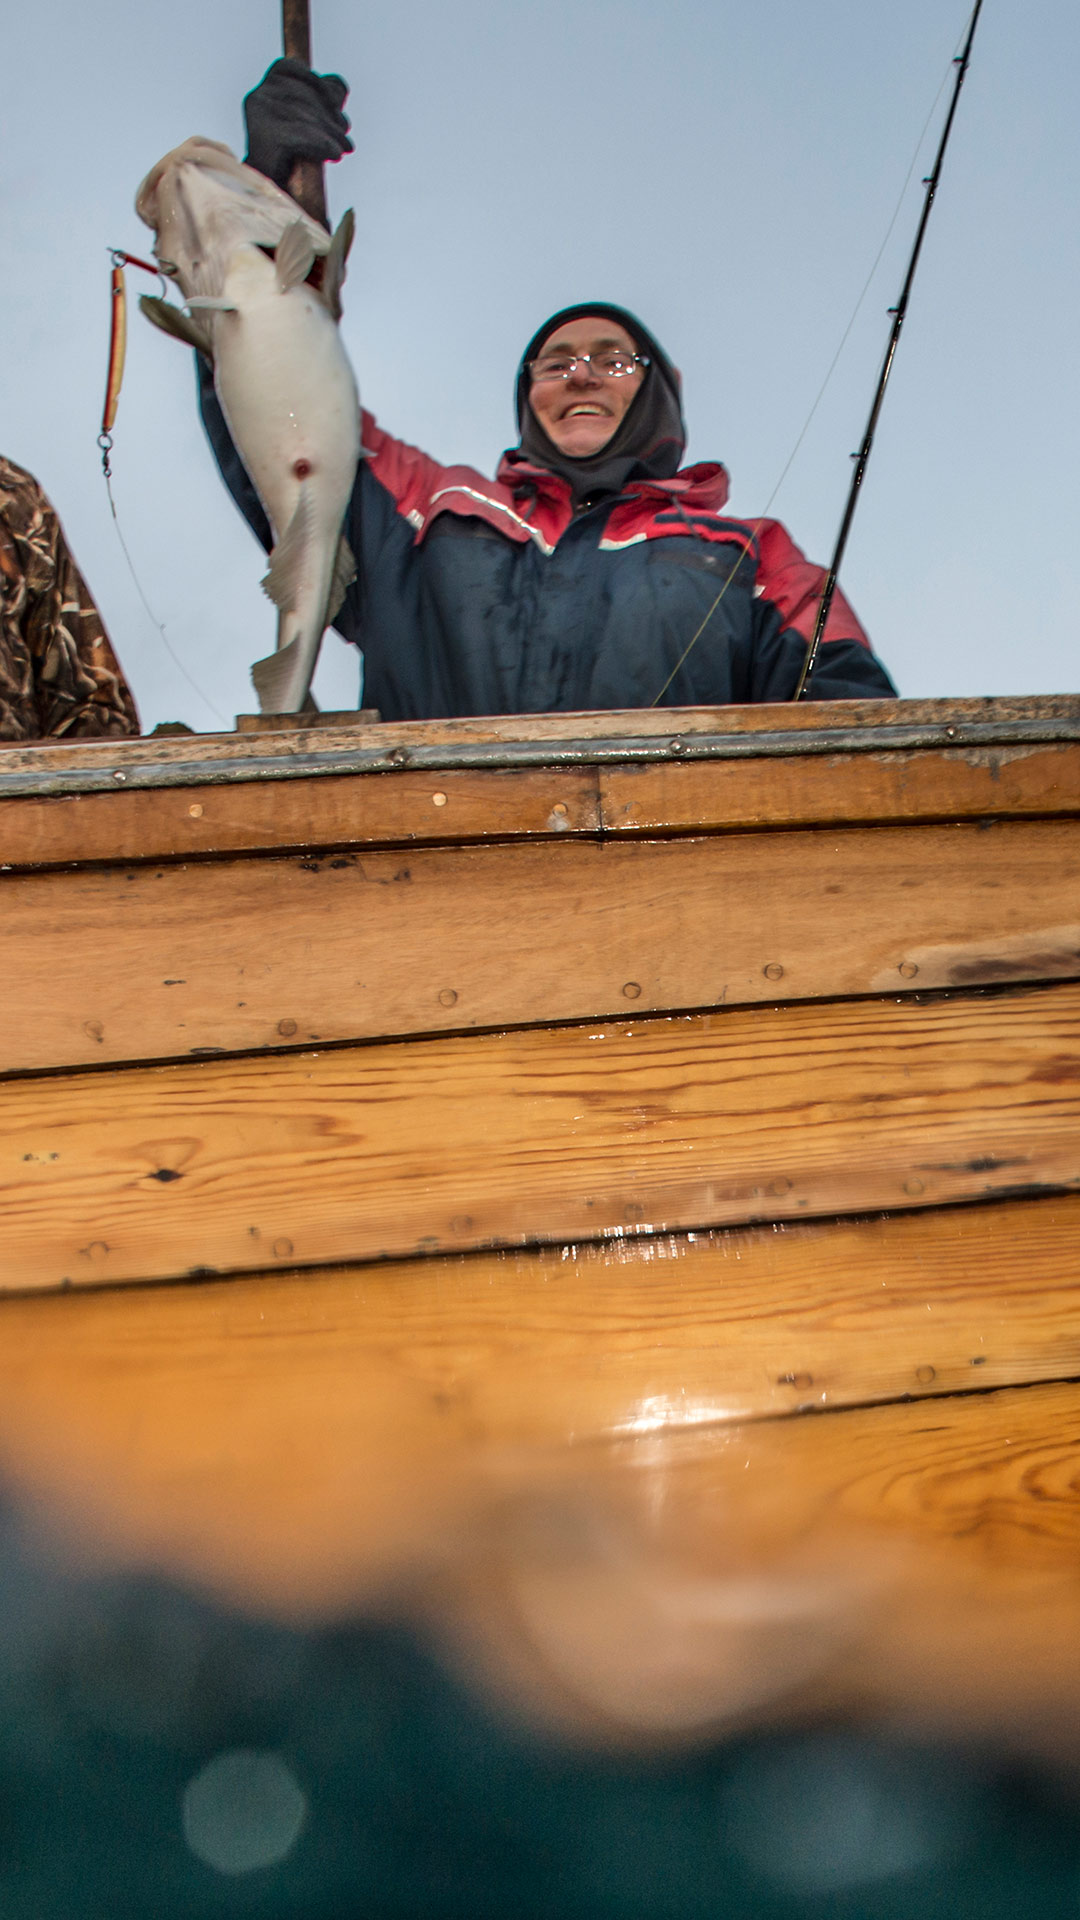 detail of fisherman on traditional fishing boat, Norway (c) vasco pinhol